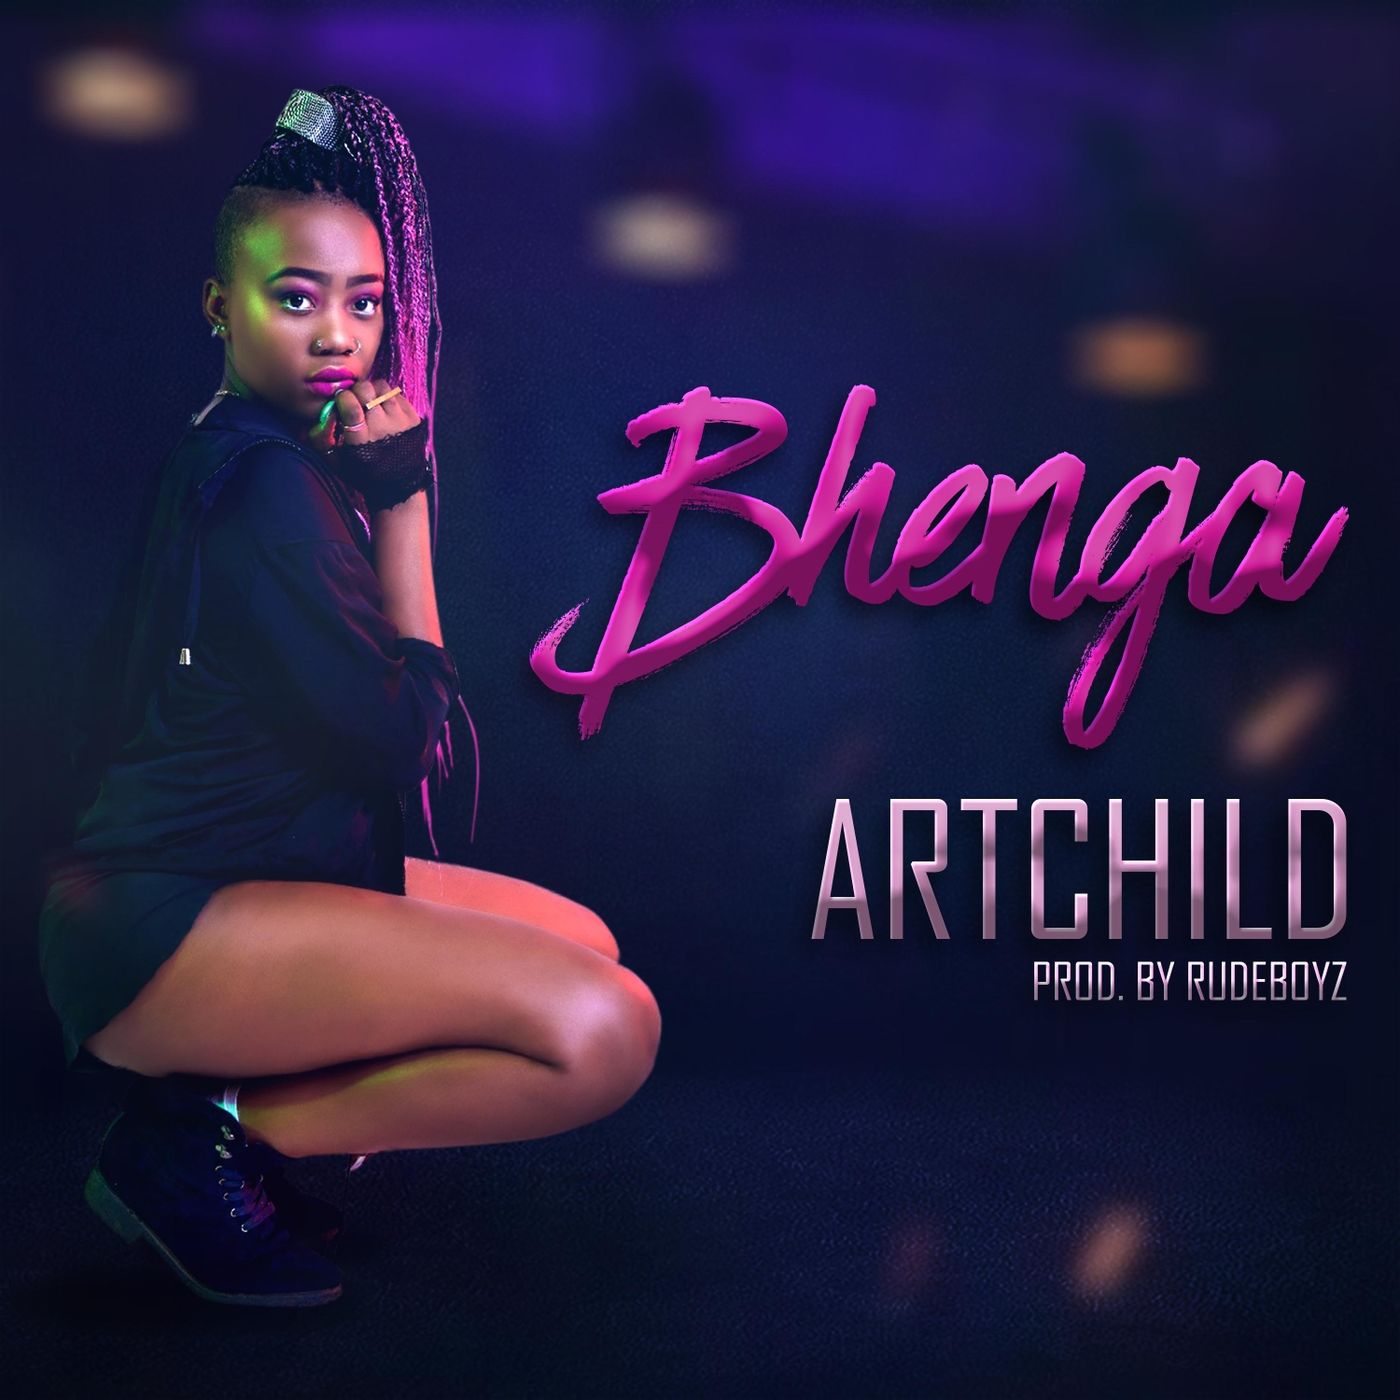 Artchild - Bhenga / Artchild